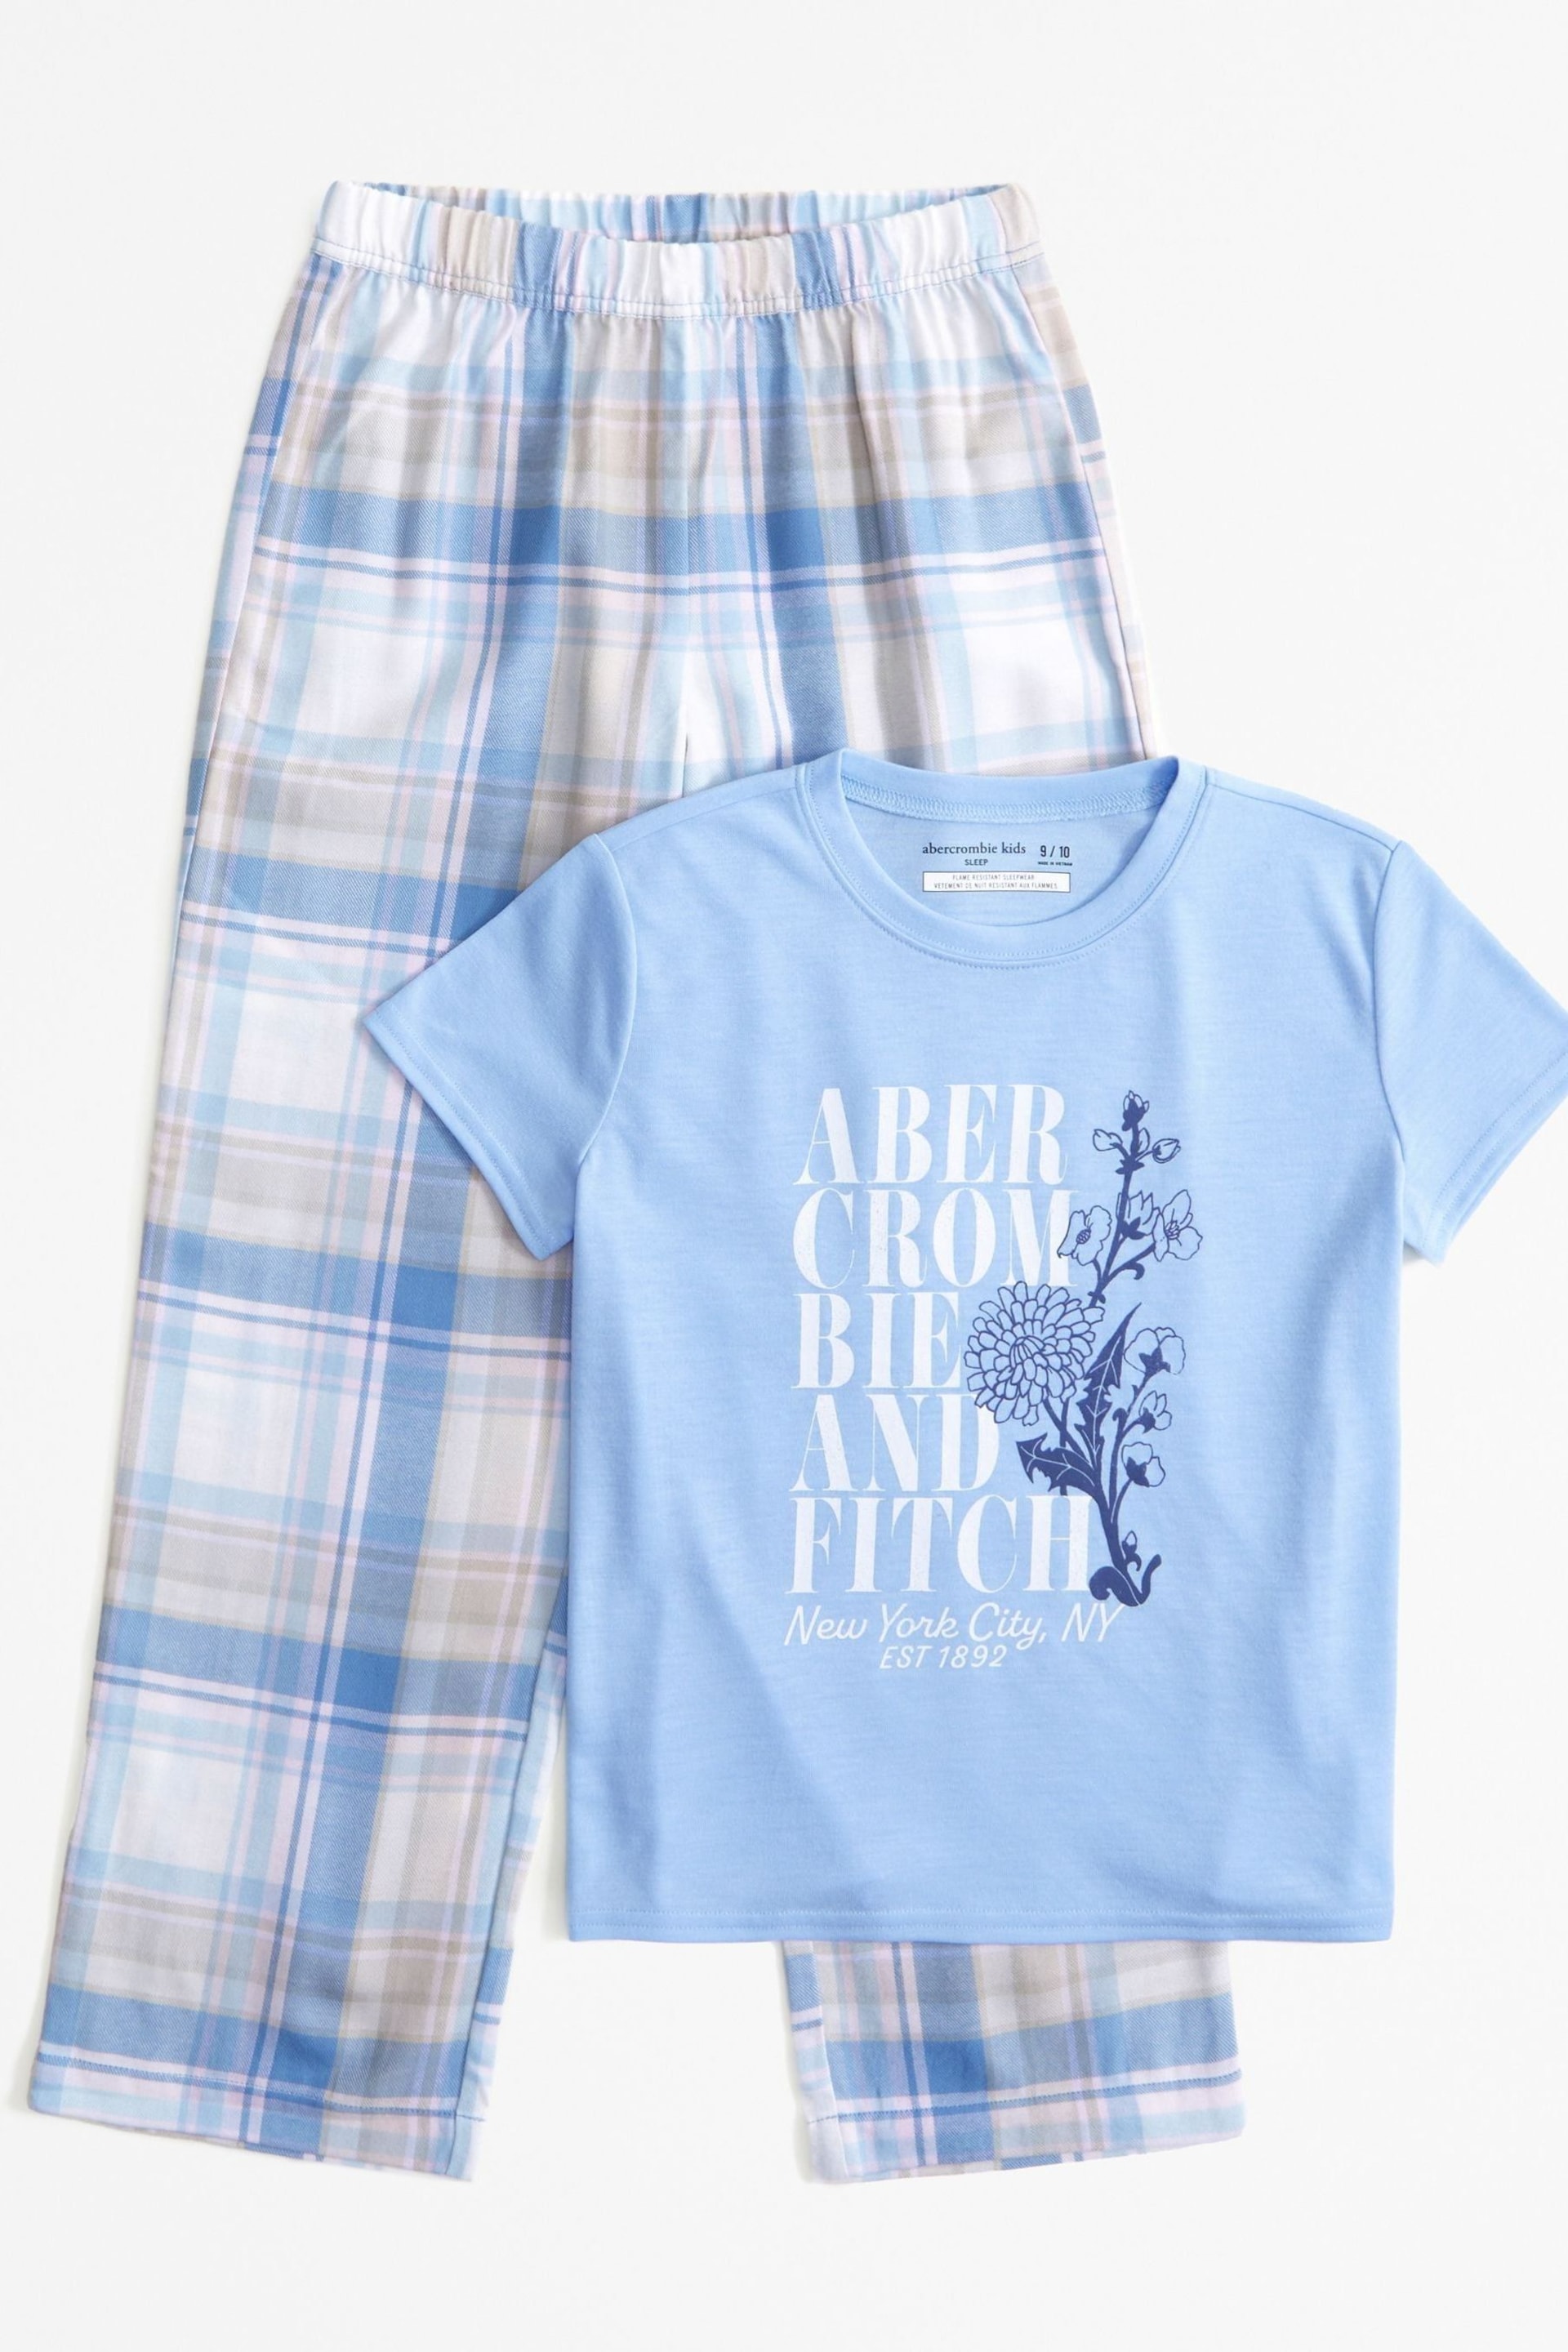 Abercrombie & Fitch Blue Gingham Logo Pyjama Set - Image 1 of 2